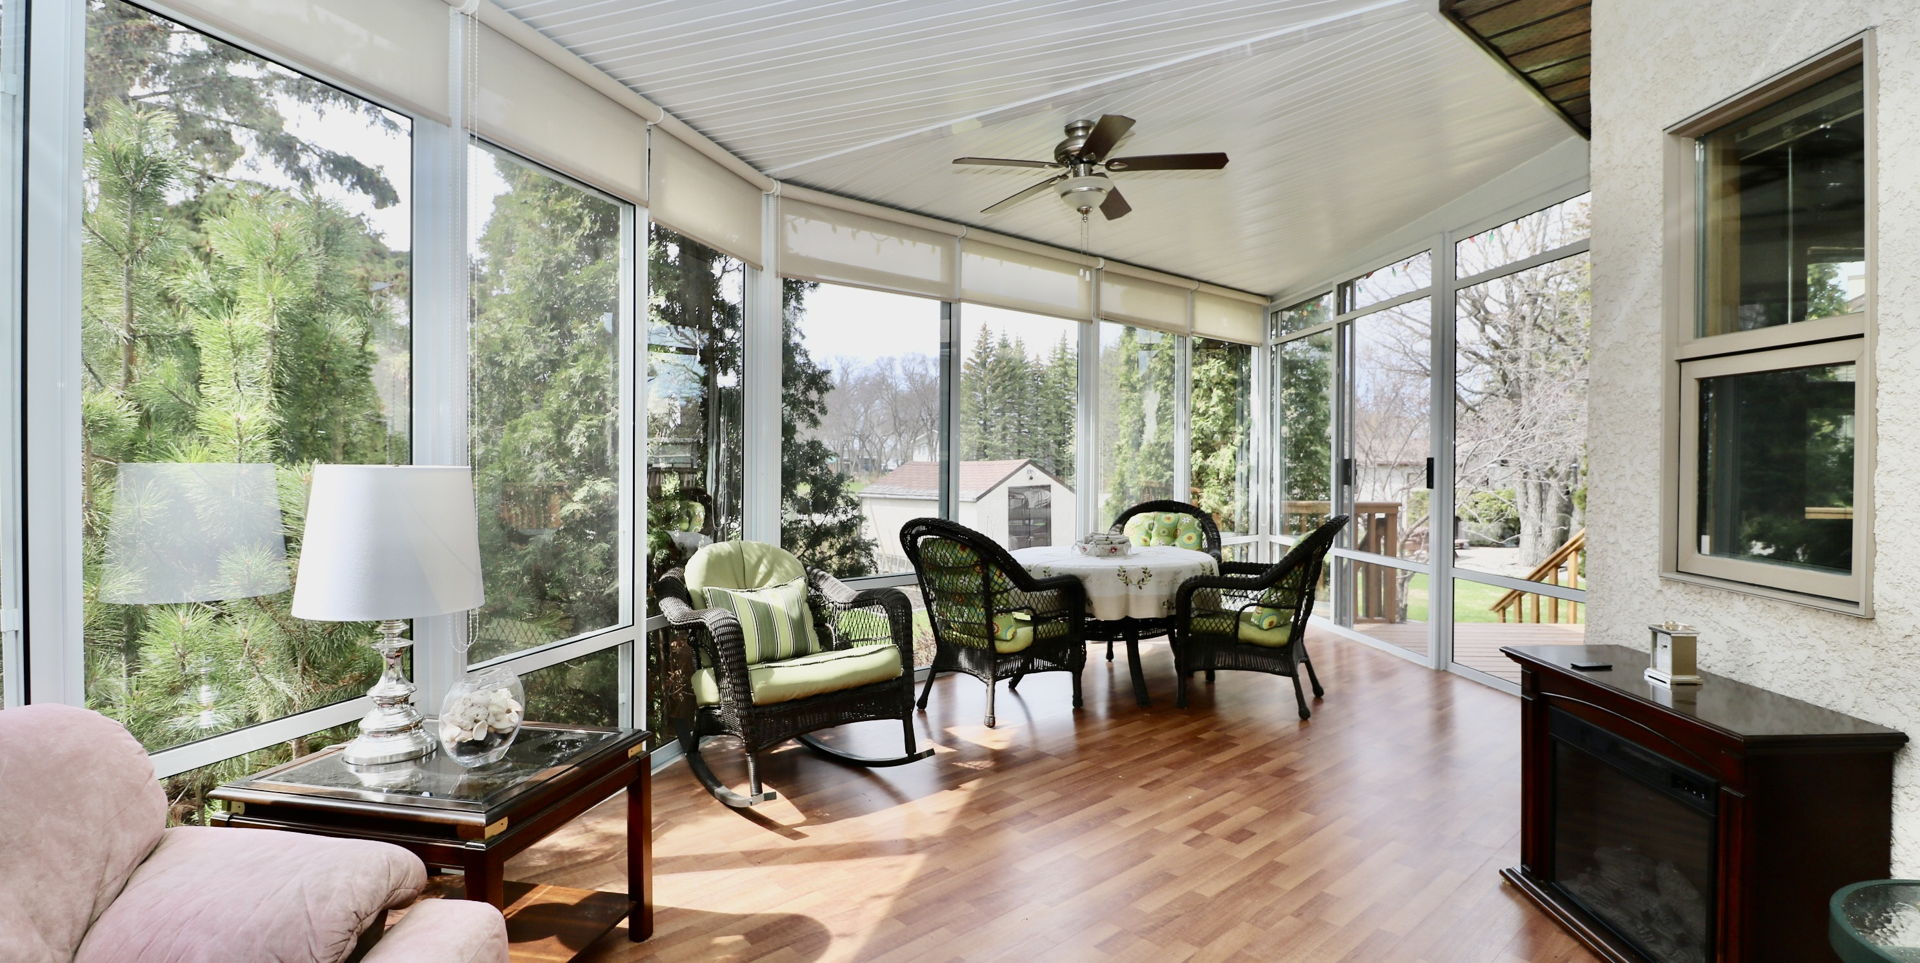 sunroom / solarium featuring hardwood floors and a ceiling fan